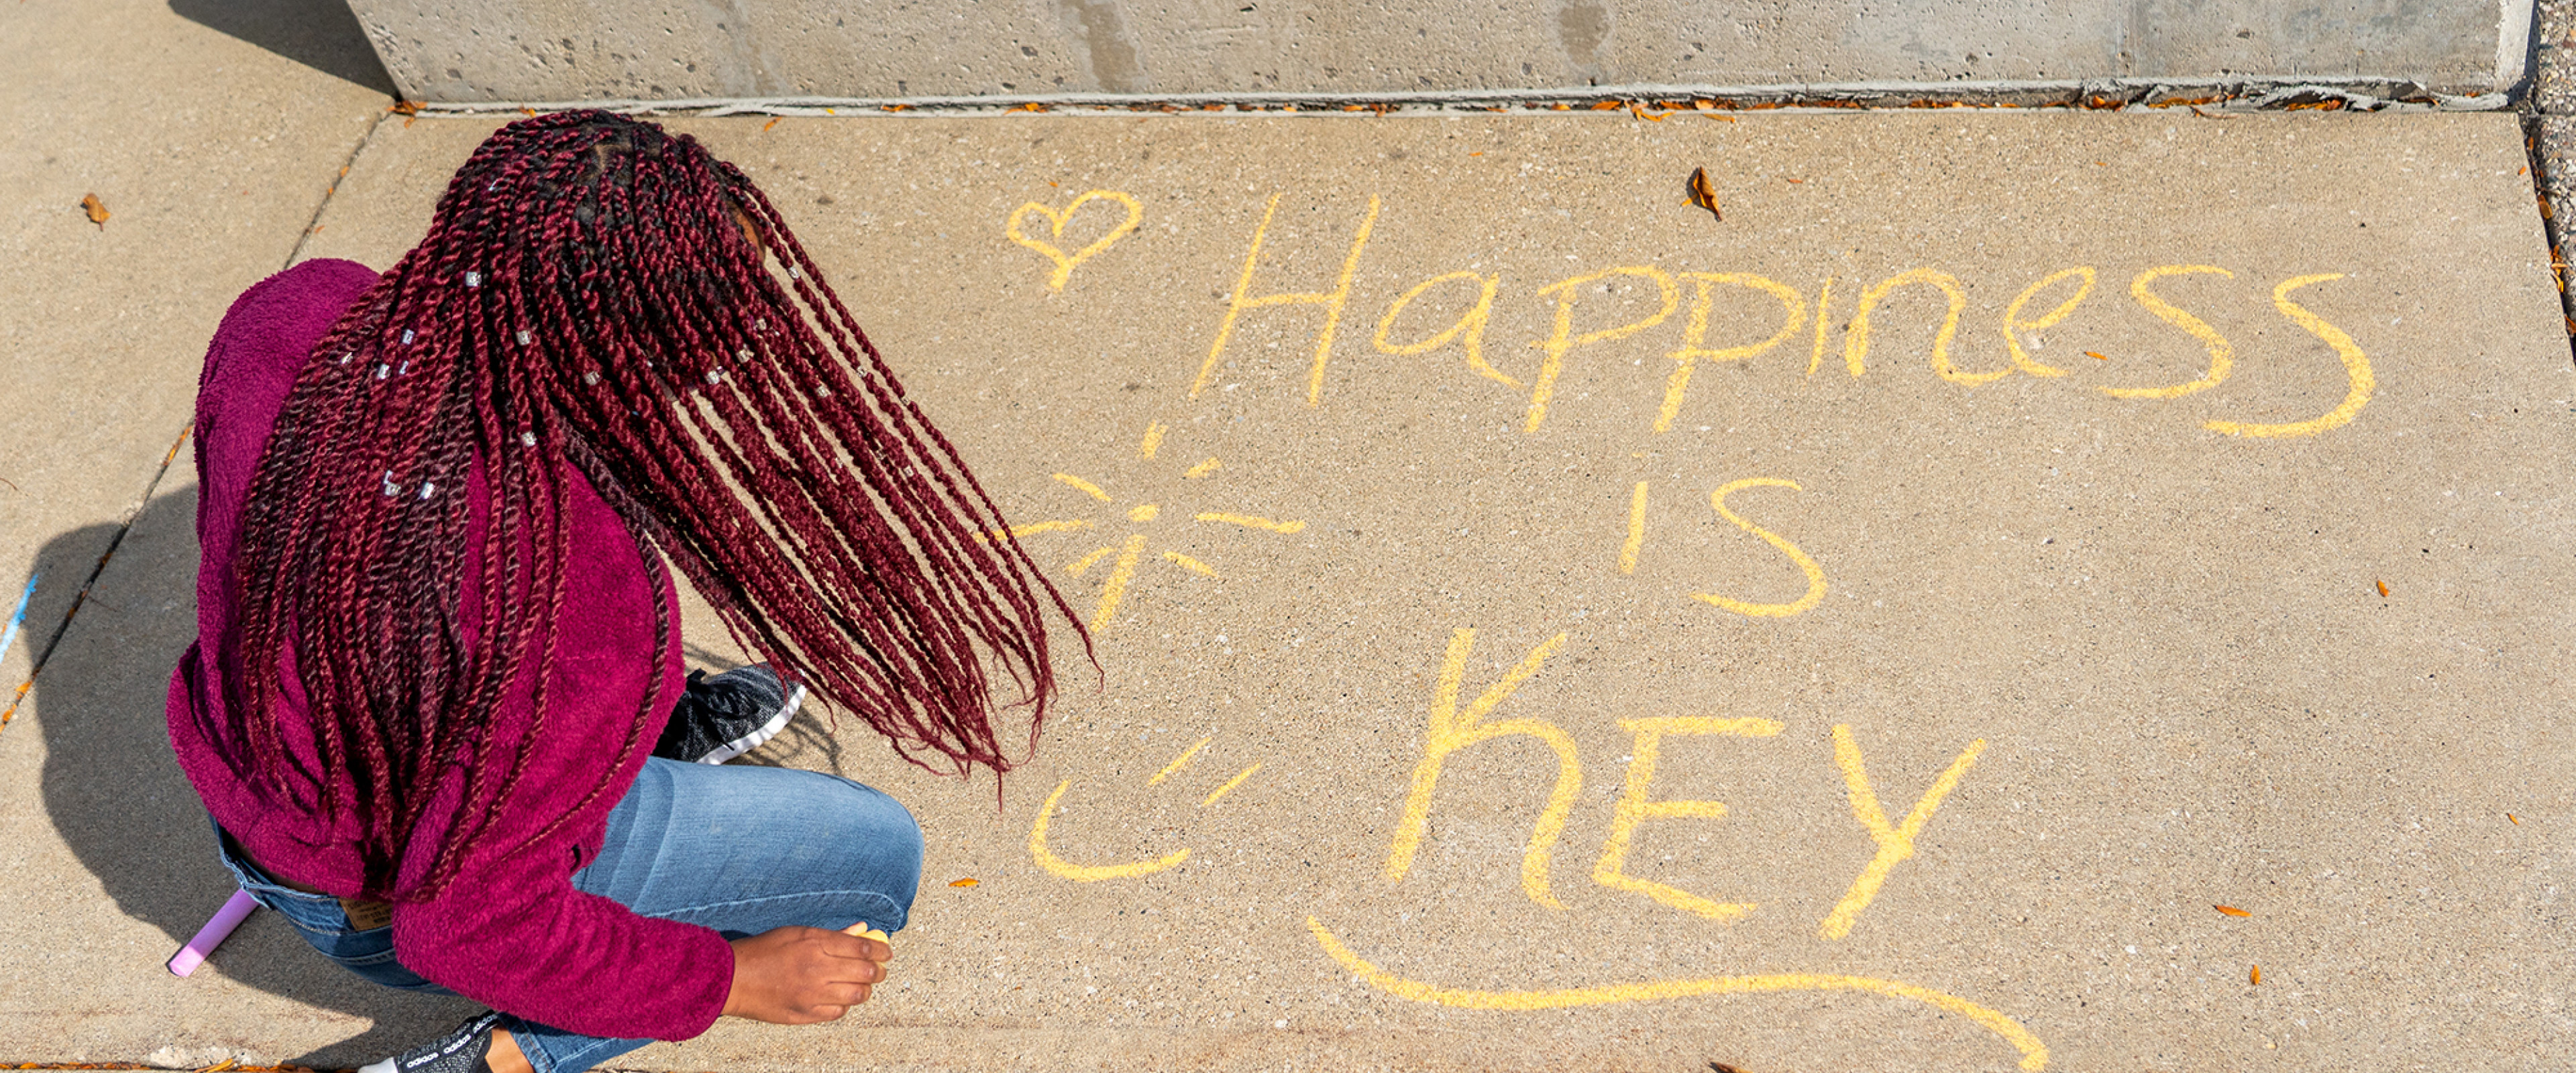 Girl writing on the sidewalk "Happiness is key"